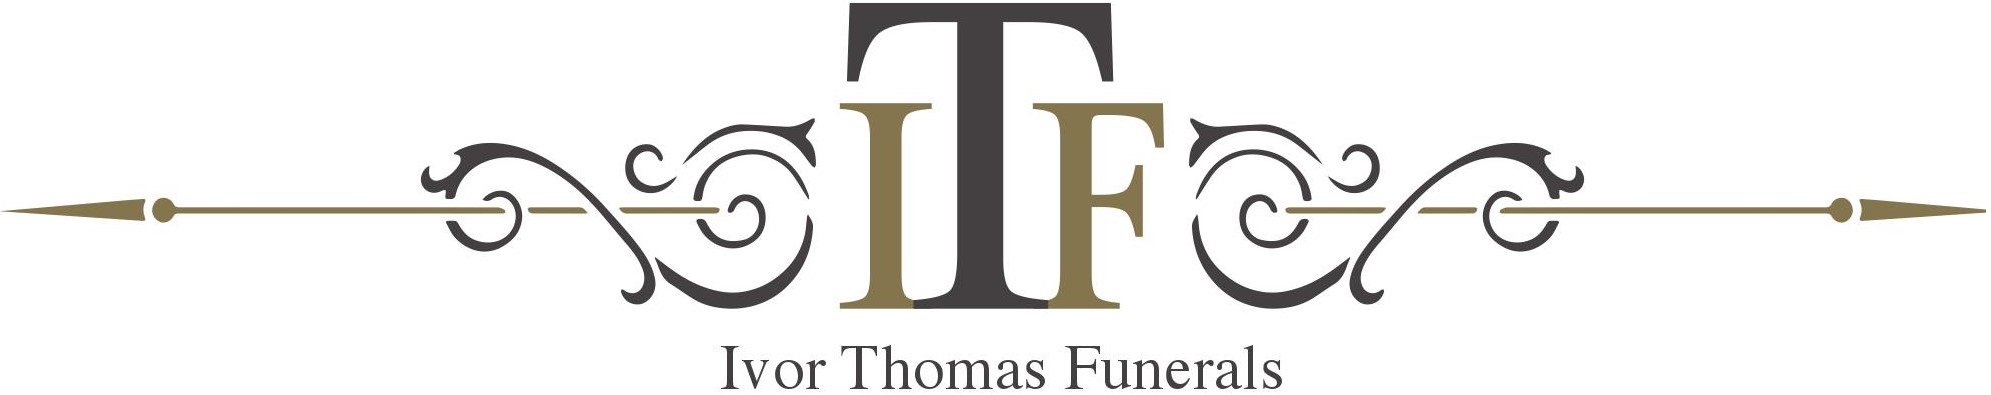 logo for Ivor Thomas Funerals